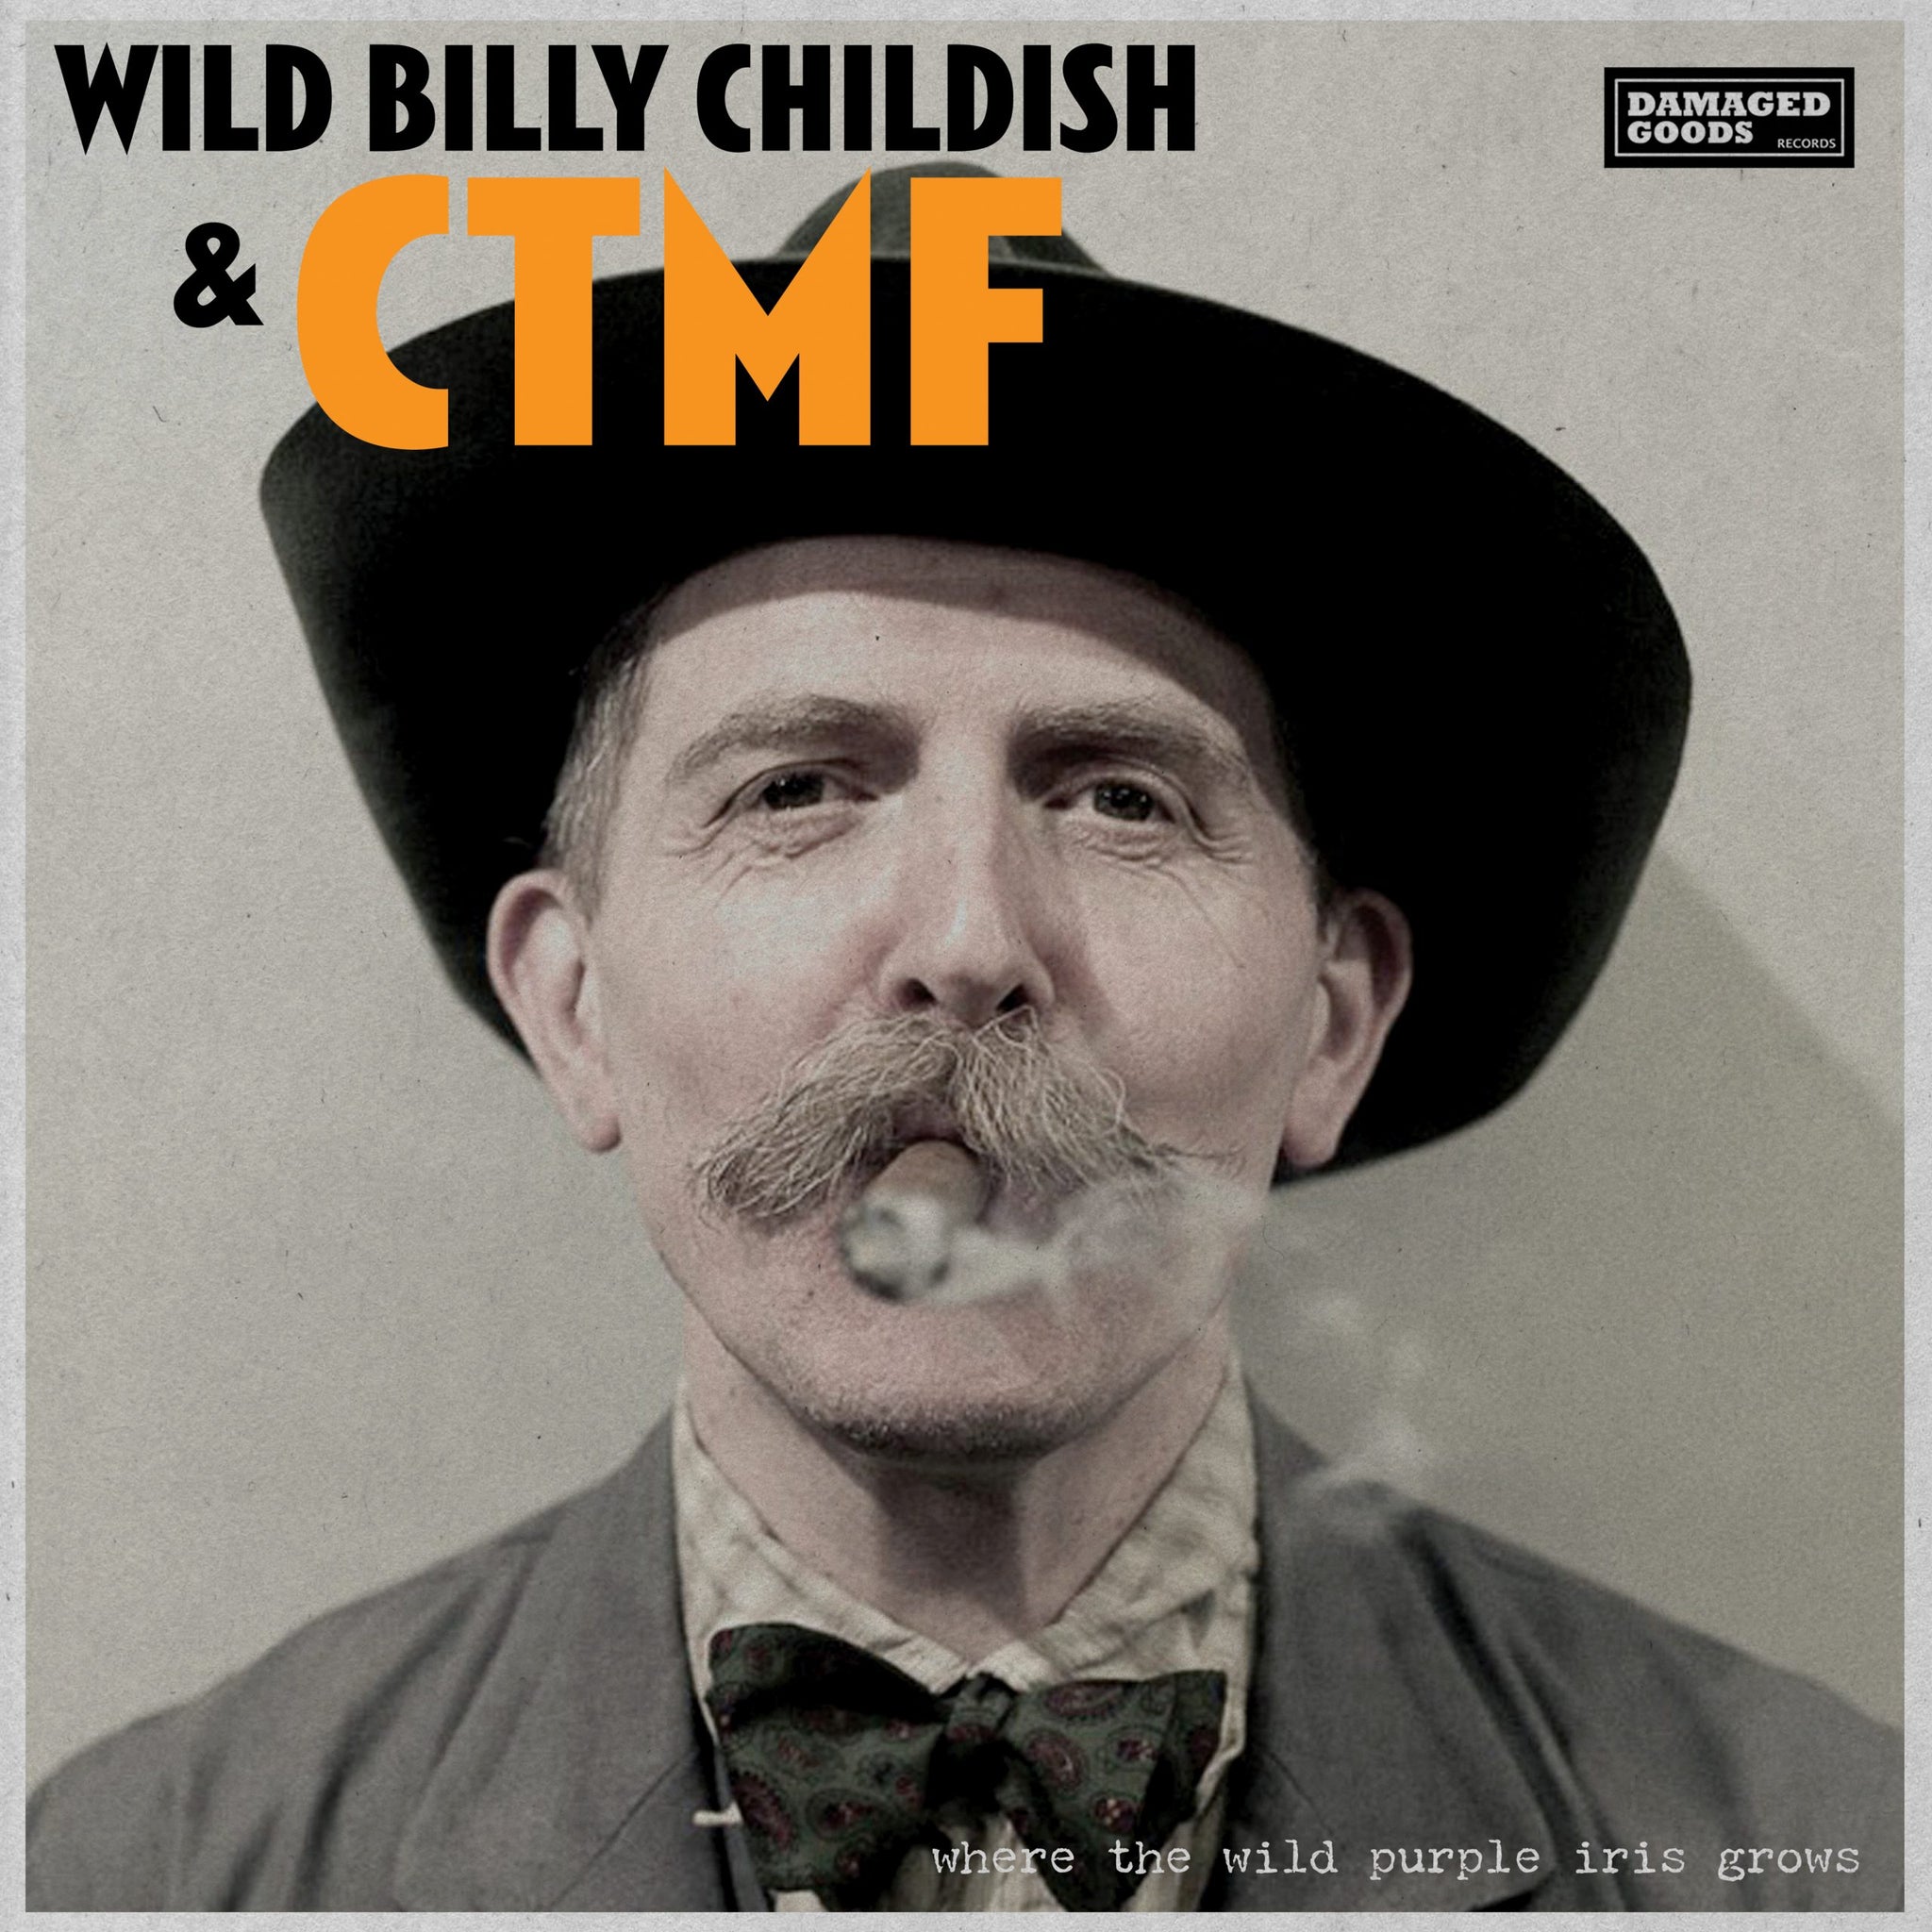 WILD BILLY CHILDISH & CTMF - Where The Wild Purple Iris Grows - CD